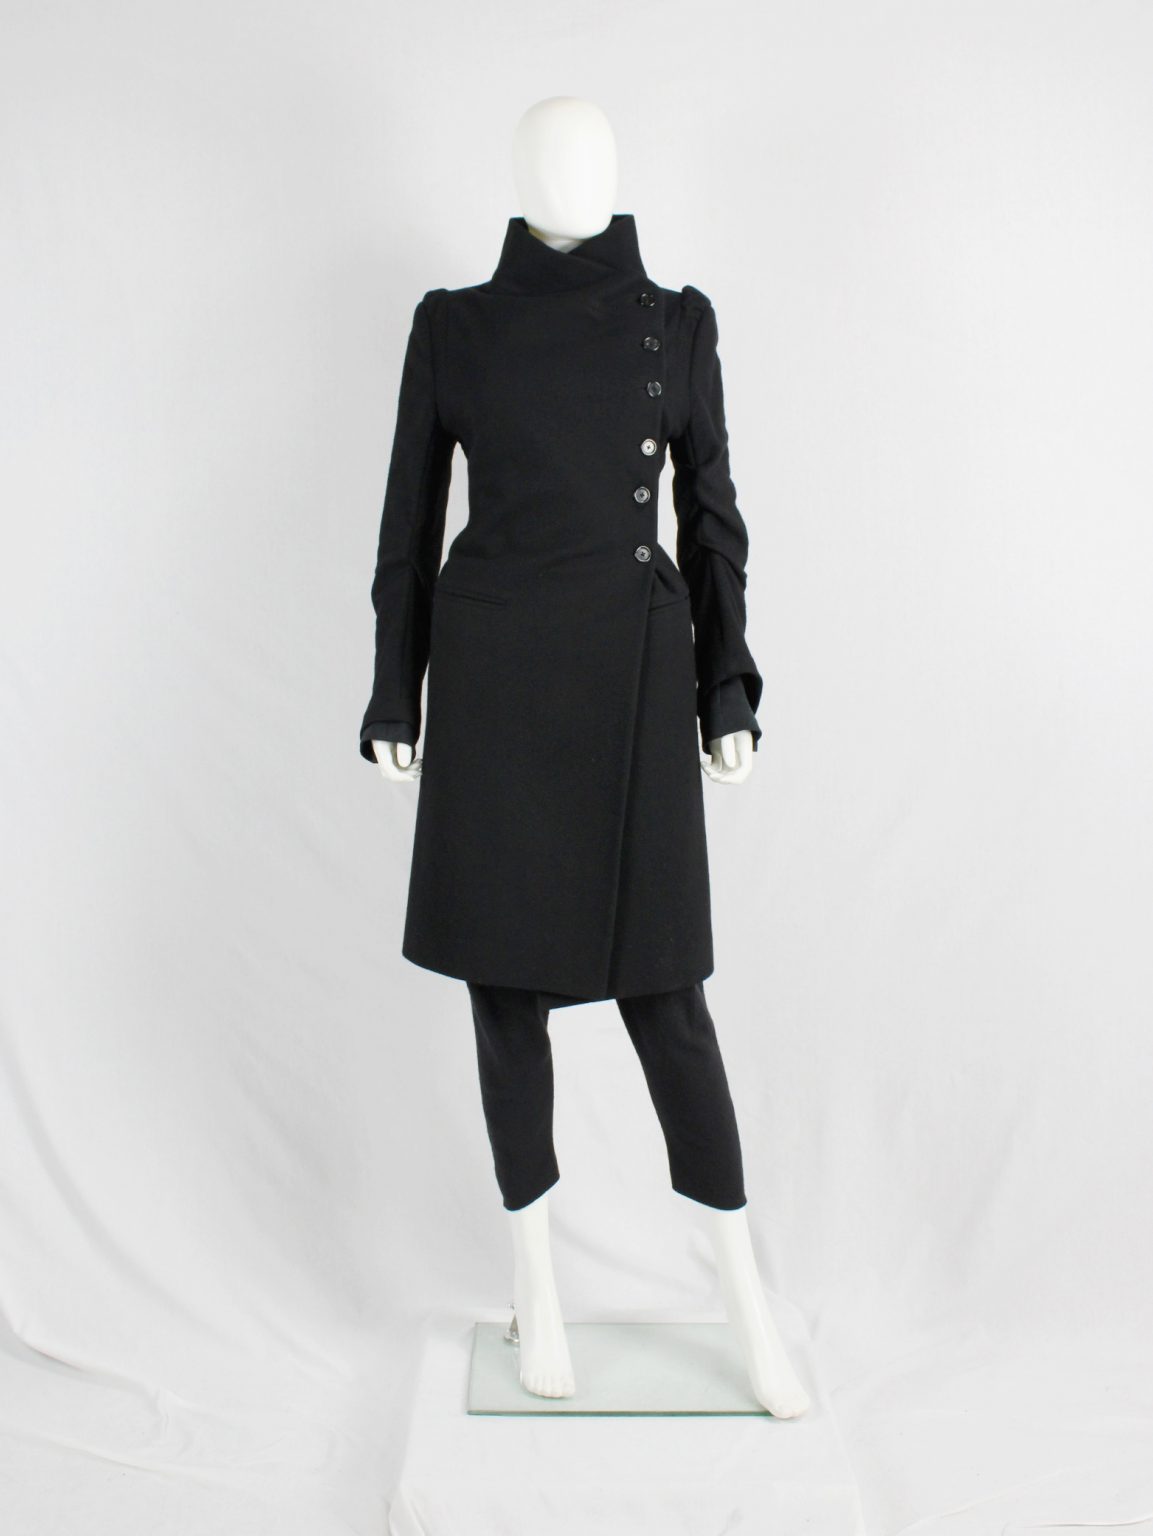 Ann Demeulemeester black long coat with asymmetric button closure